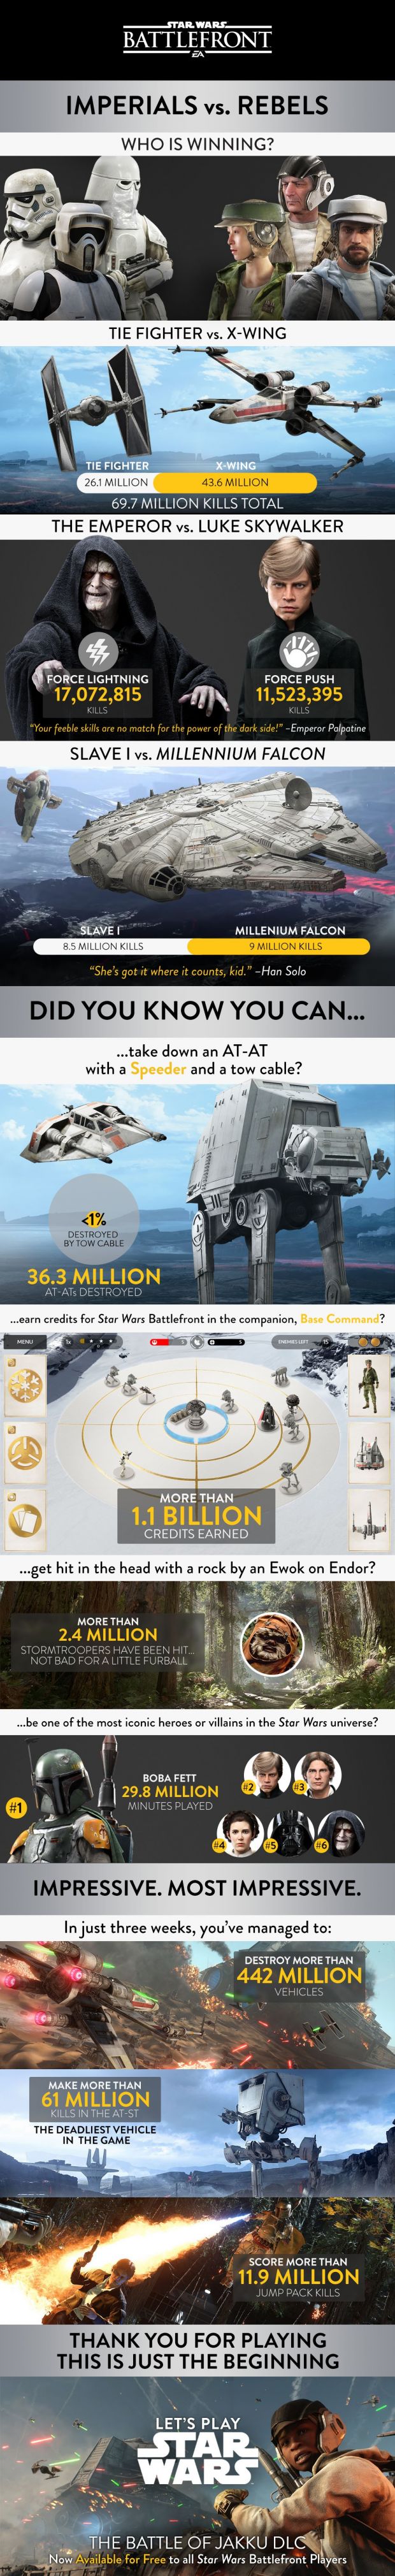 Star Wars: Battlefront infographic